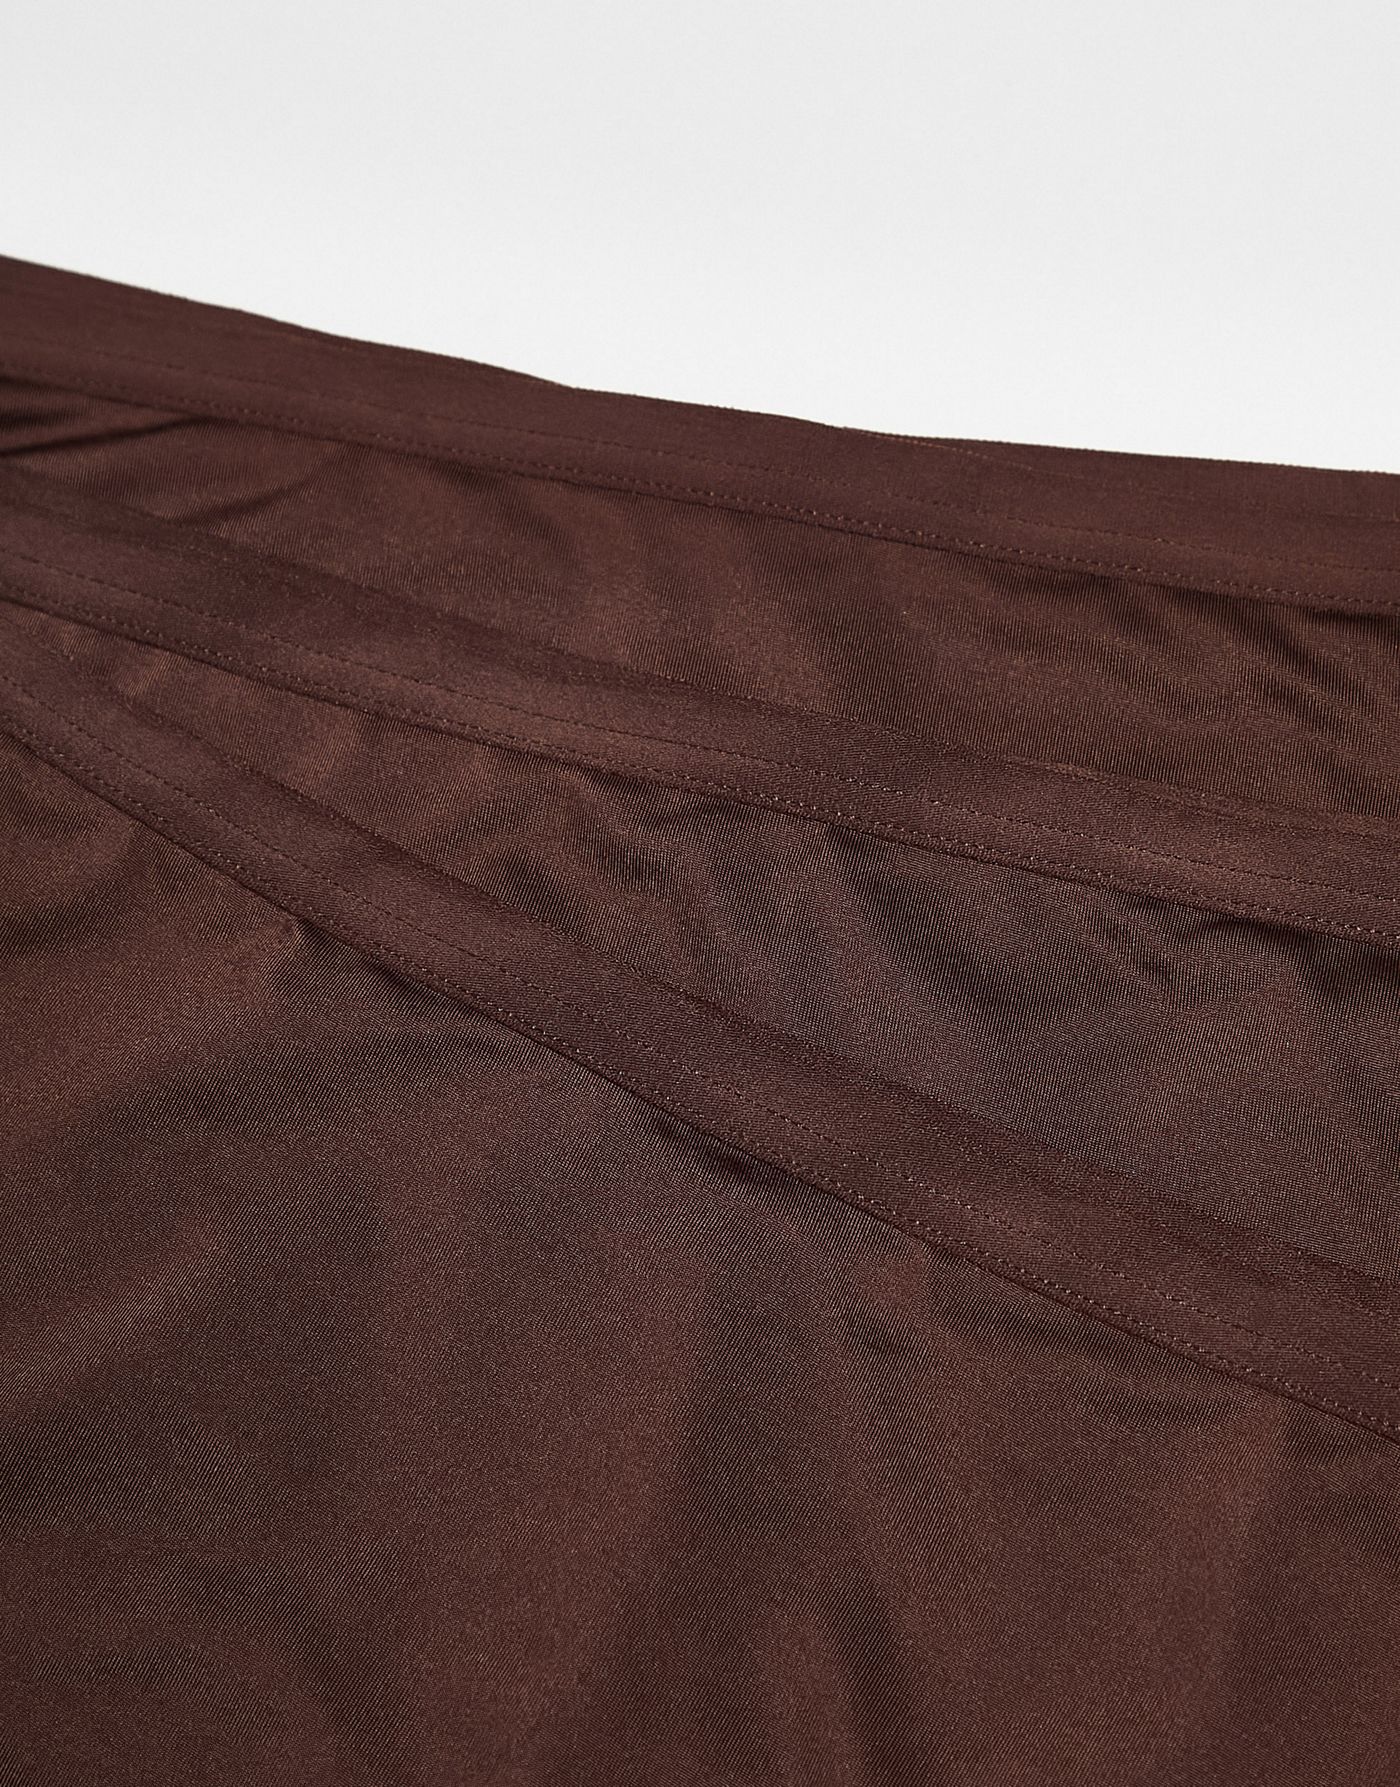 ASOS DESIGN Curve 3 pack microfibre high waist thong in brown